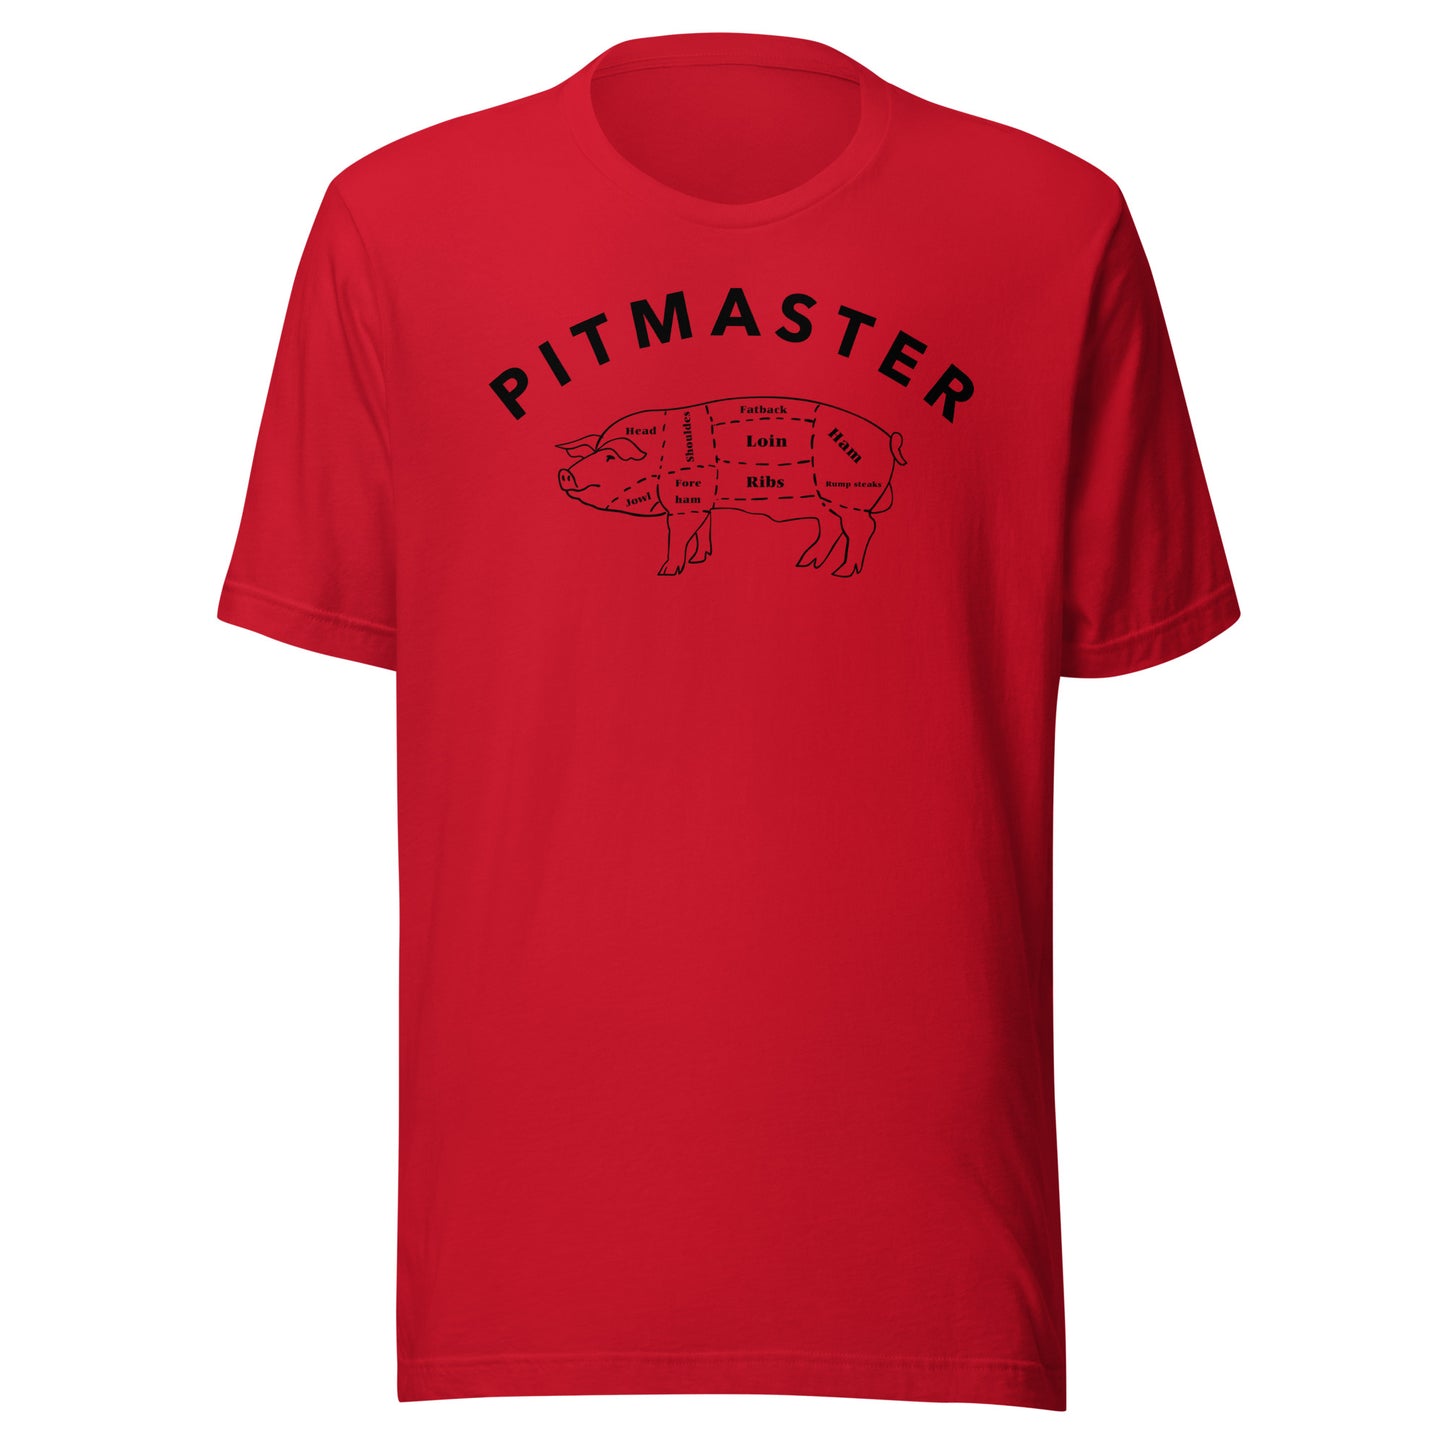 Pitmaster t-shirt - Pork edition